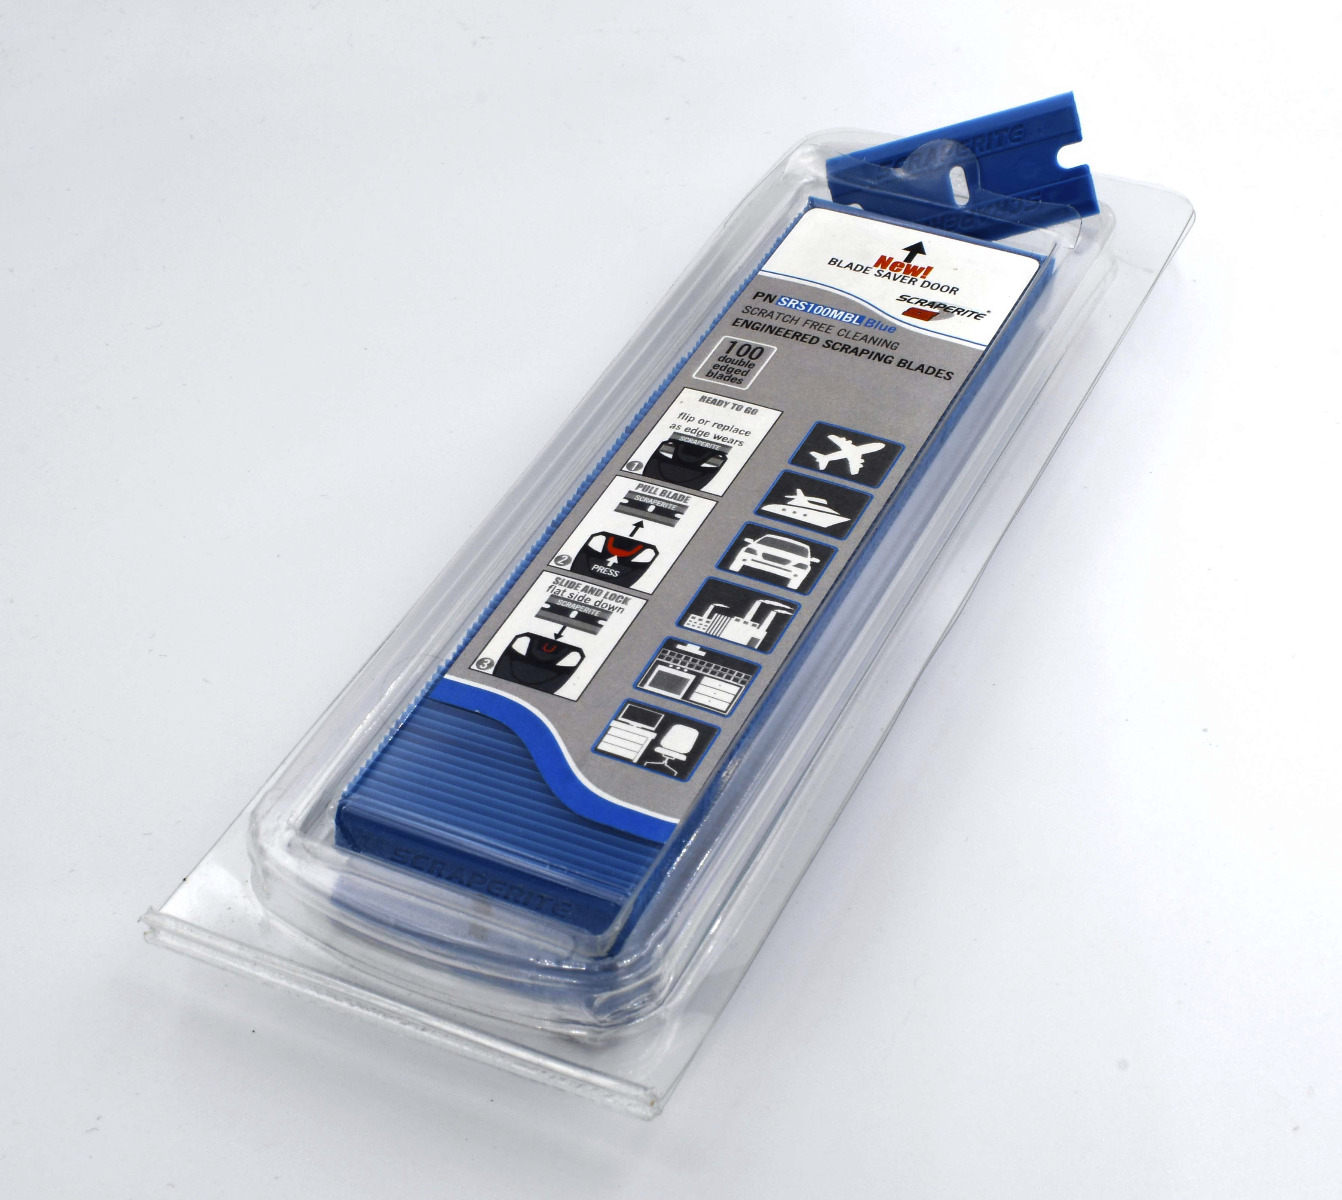 Blue plastic razor blade replacement 100 pack